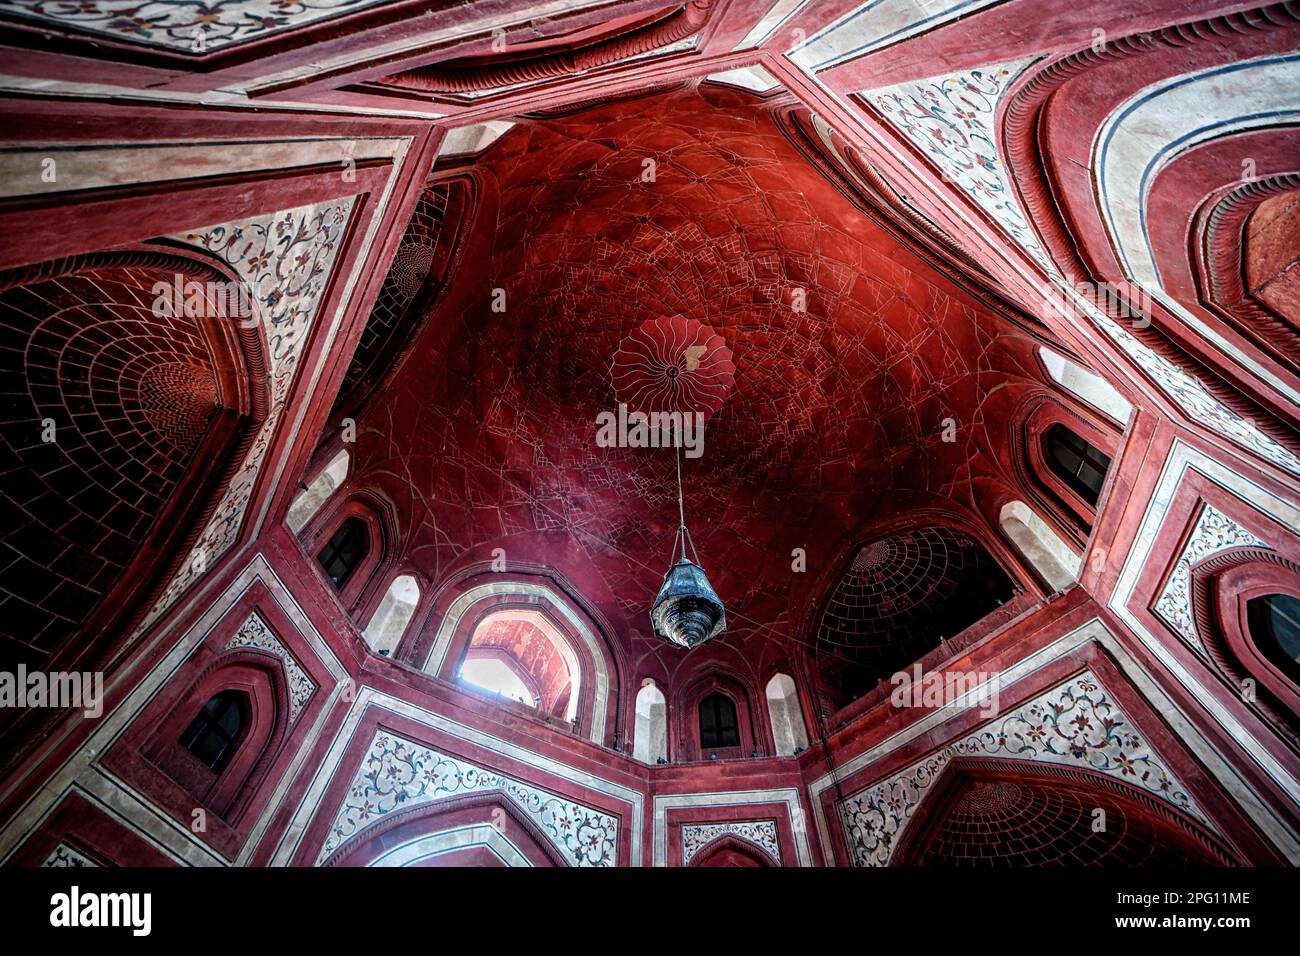 People Visit the Inside of the Mausoleum Taj Maha Editorial Stock Image -  Image of site, indian: 86436444